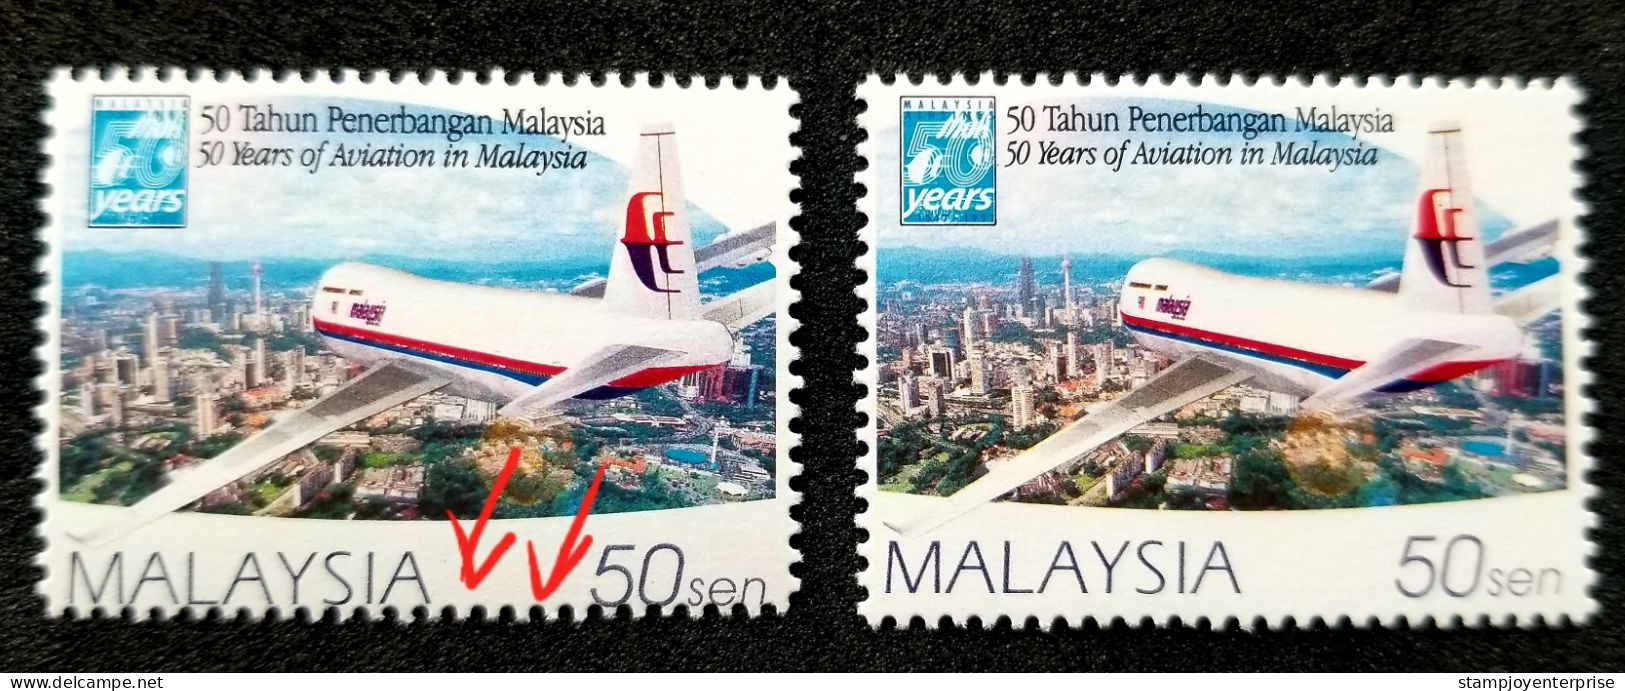 Malaysia 50 Years Aviation 1997 Airplane Transport Vehicle (stamp) MNH *Perf Shift *Error *Rare - Malasia (1964-...)